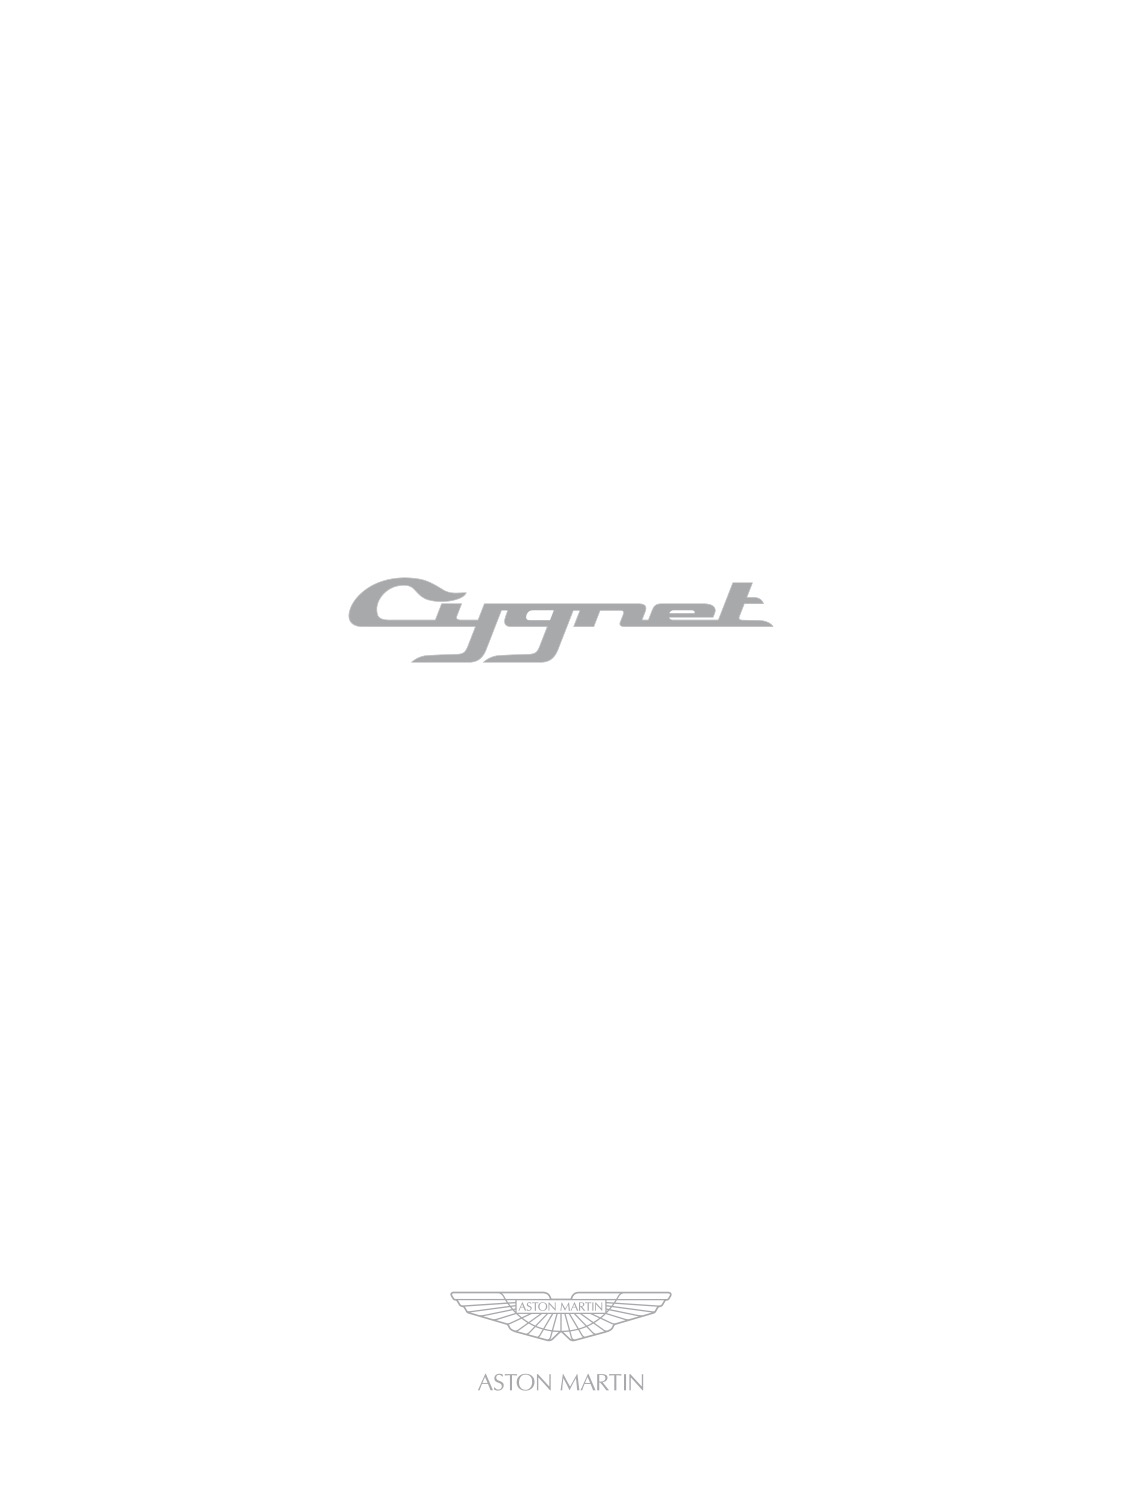 2012 Aston Martin Cygnet Brochure